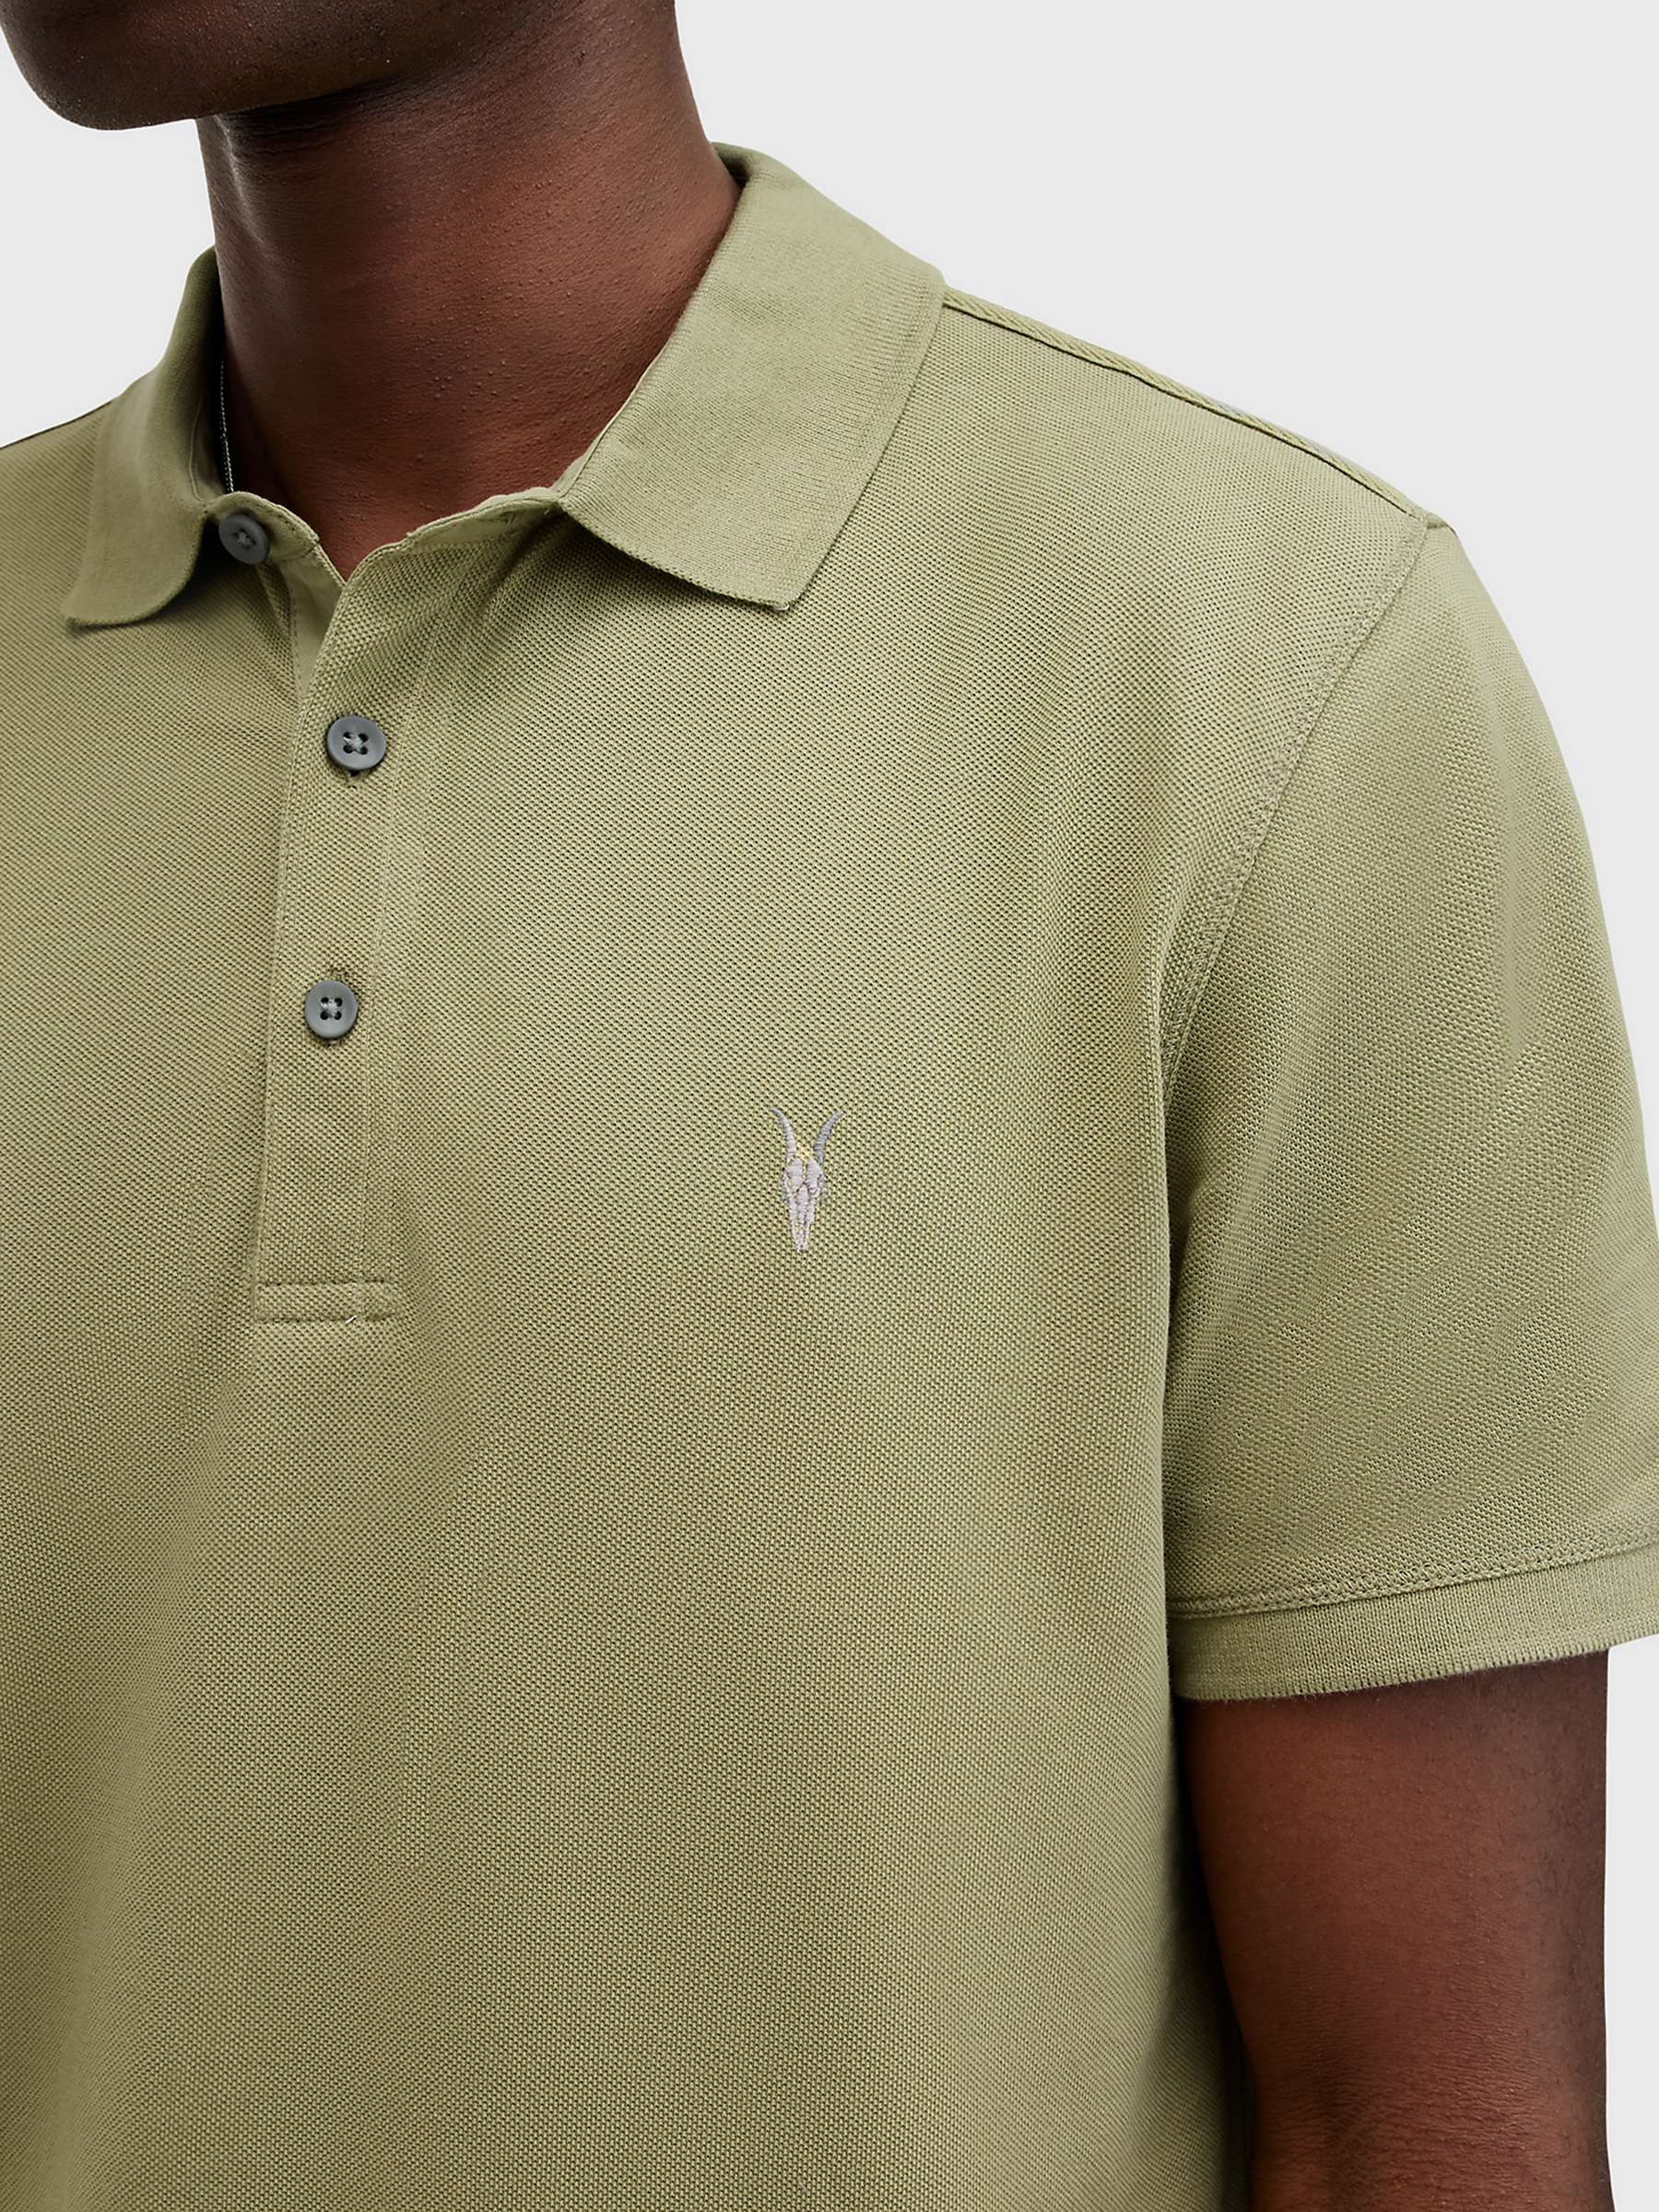 Buy AllSaints Reform Short Sleeve Polo Shirt, Pack of 2 Online at johnlewis.com